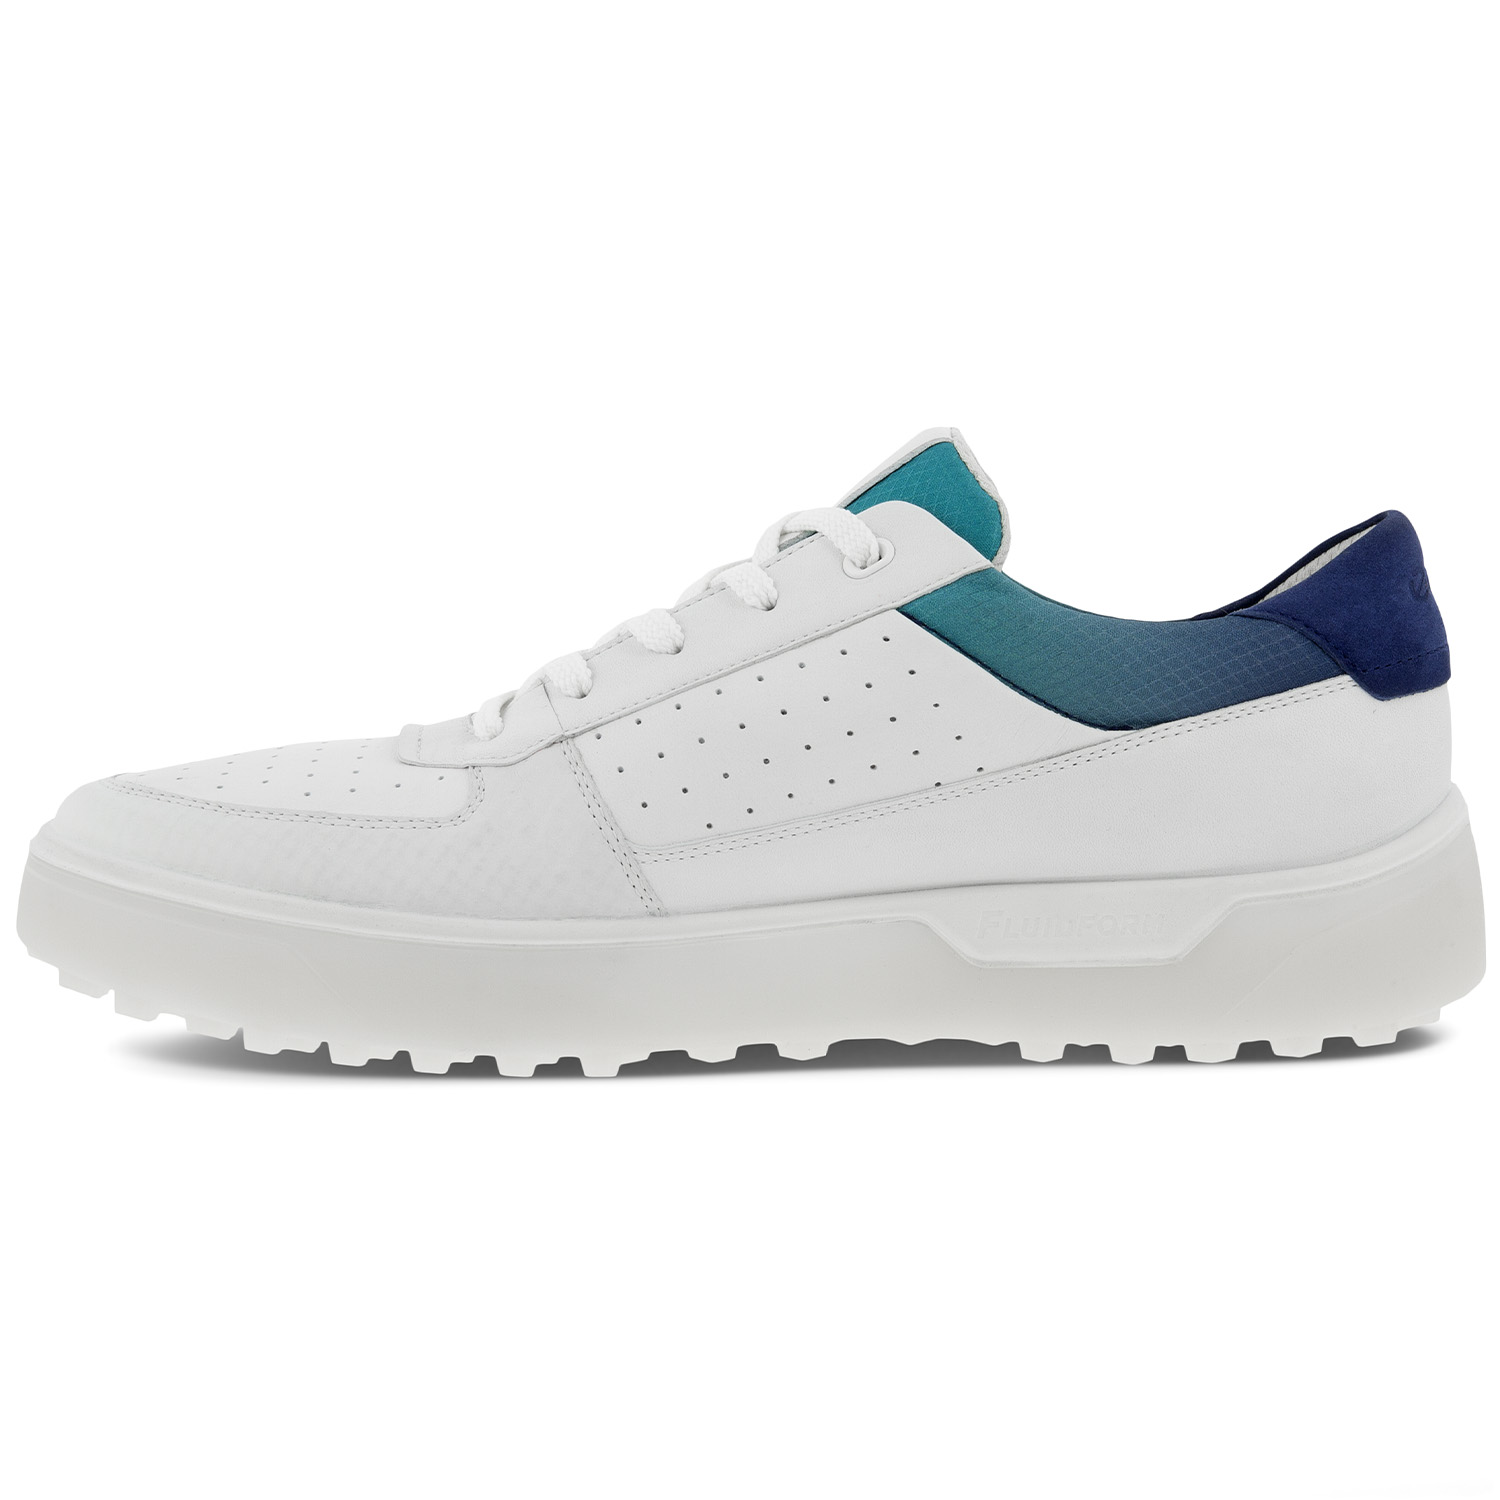 ECCO Tray Golf Shoes White/Blue Depths/Caribbean | Scottsdale Golf